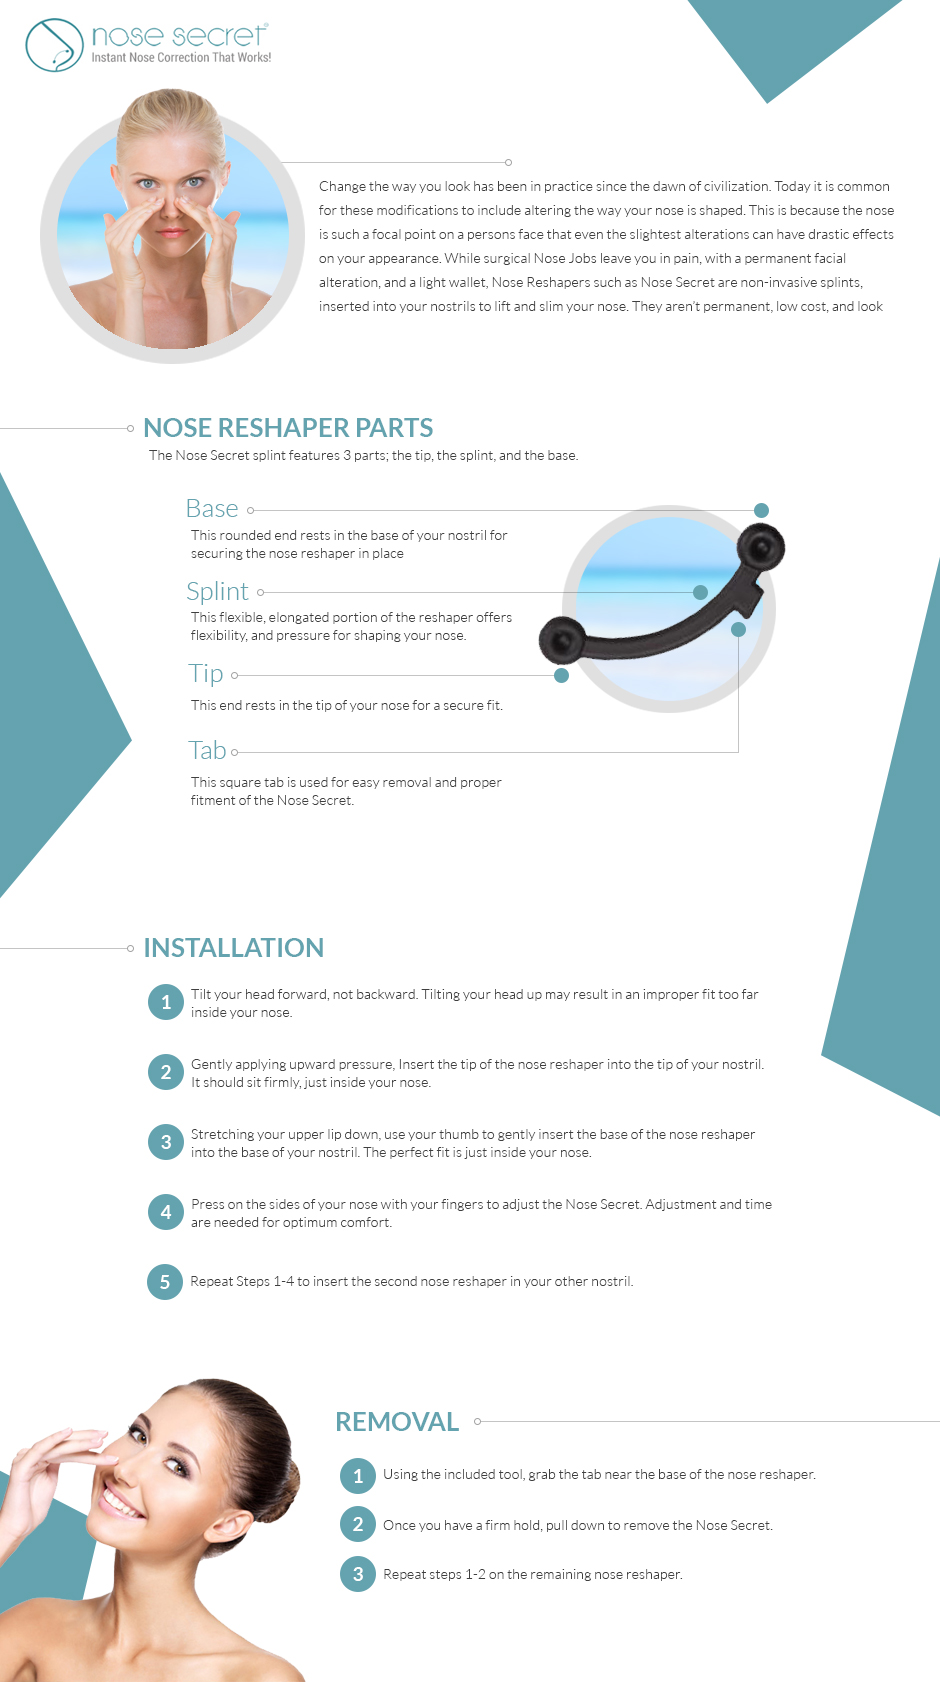 Proper Nose Secret, nose reshaper, Installation and Removal Infographic.